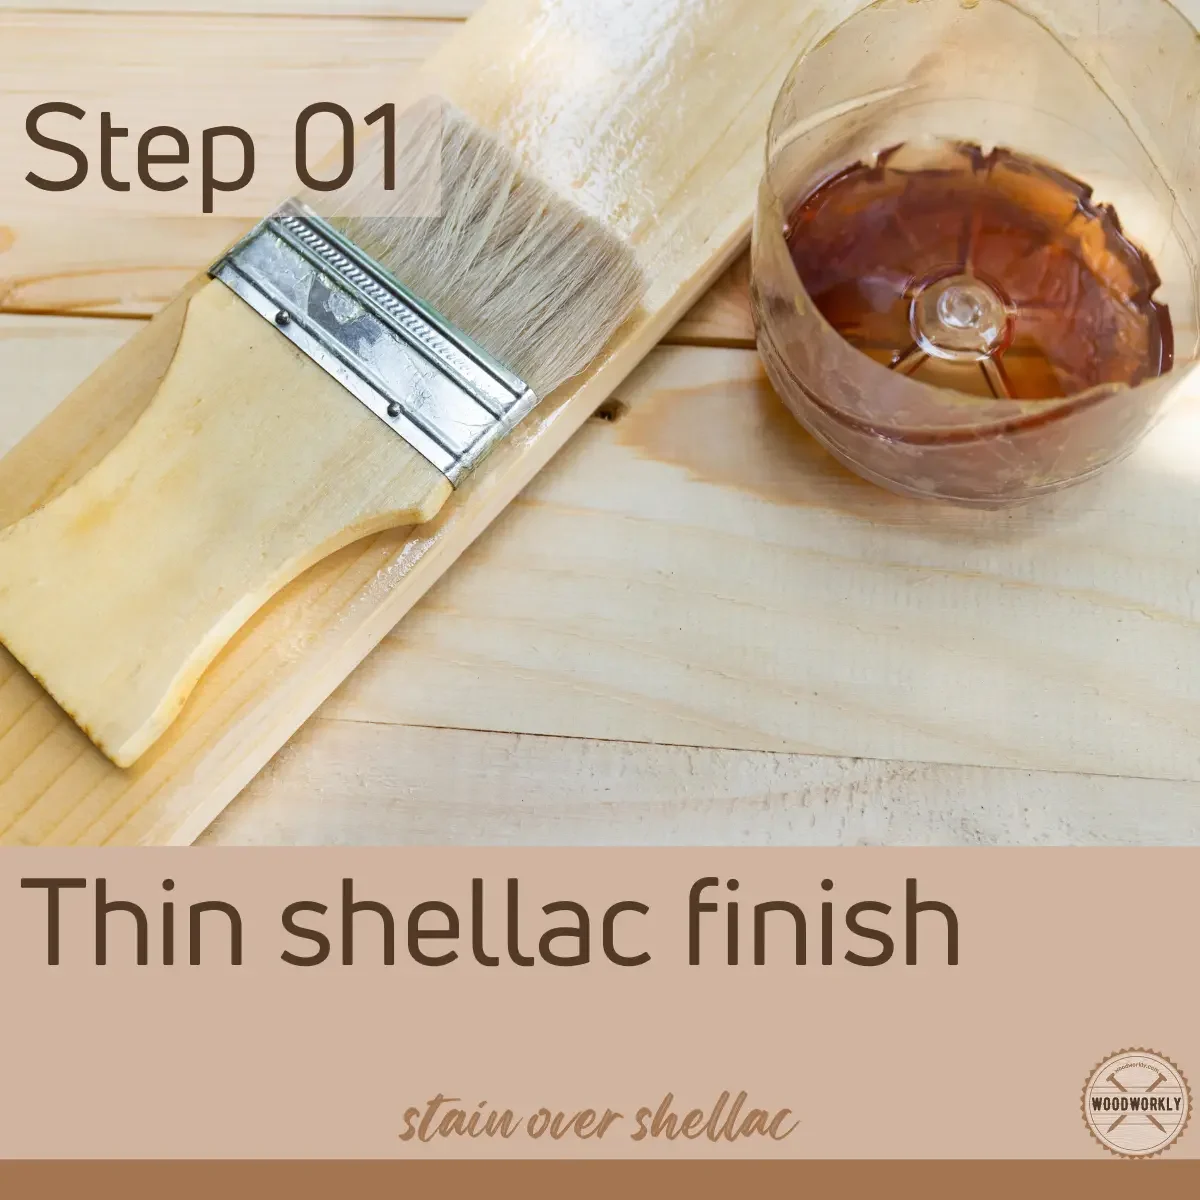 Thin shellac finish